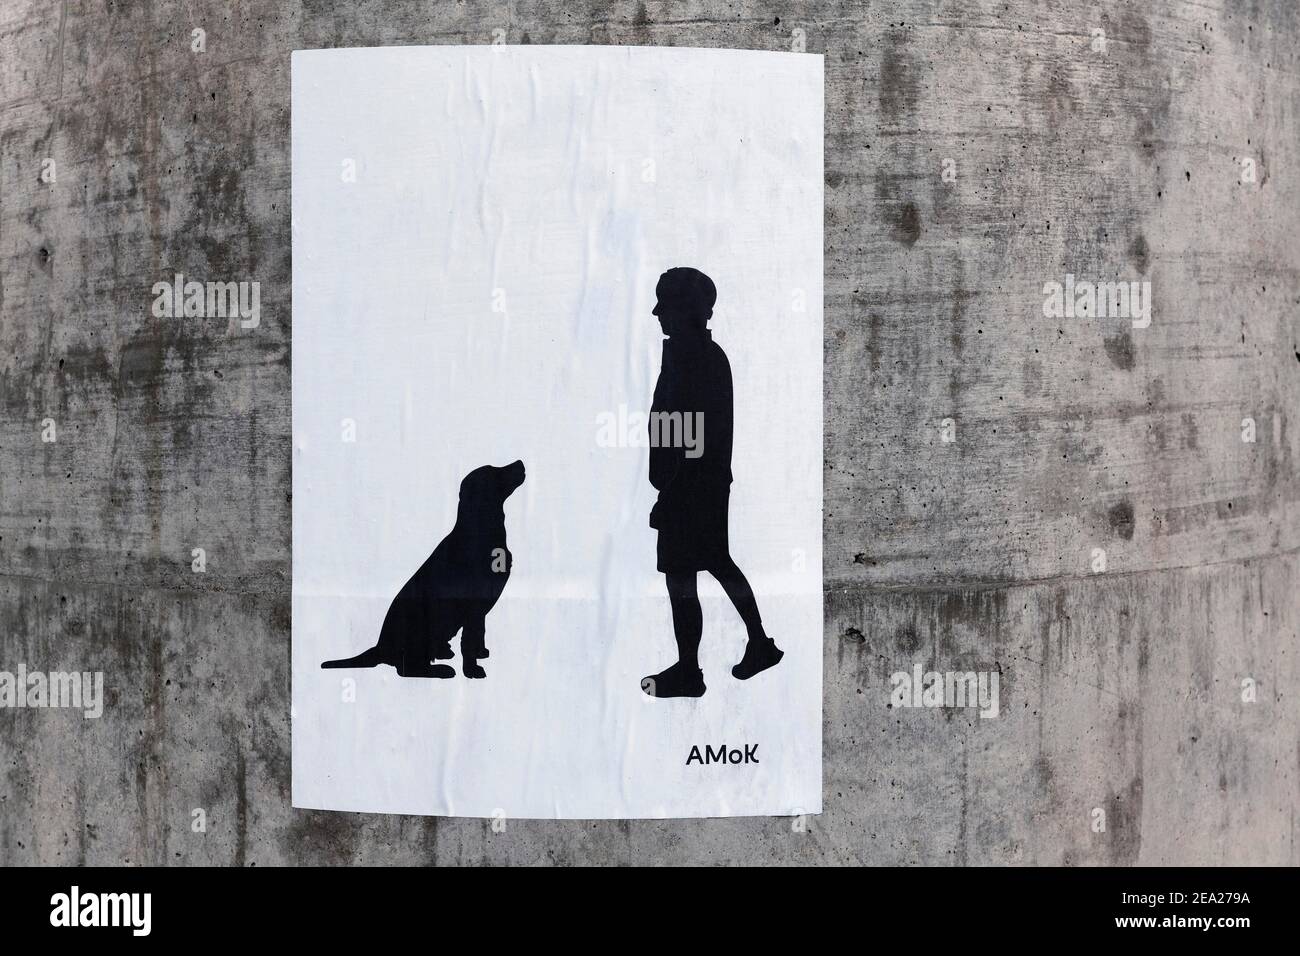 Pasta-up, cane e uomo, silhouette di streetart artista Amok, Duesseldorf, Nord Reno-Westfalia, Germania Foto Stock